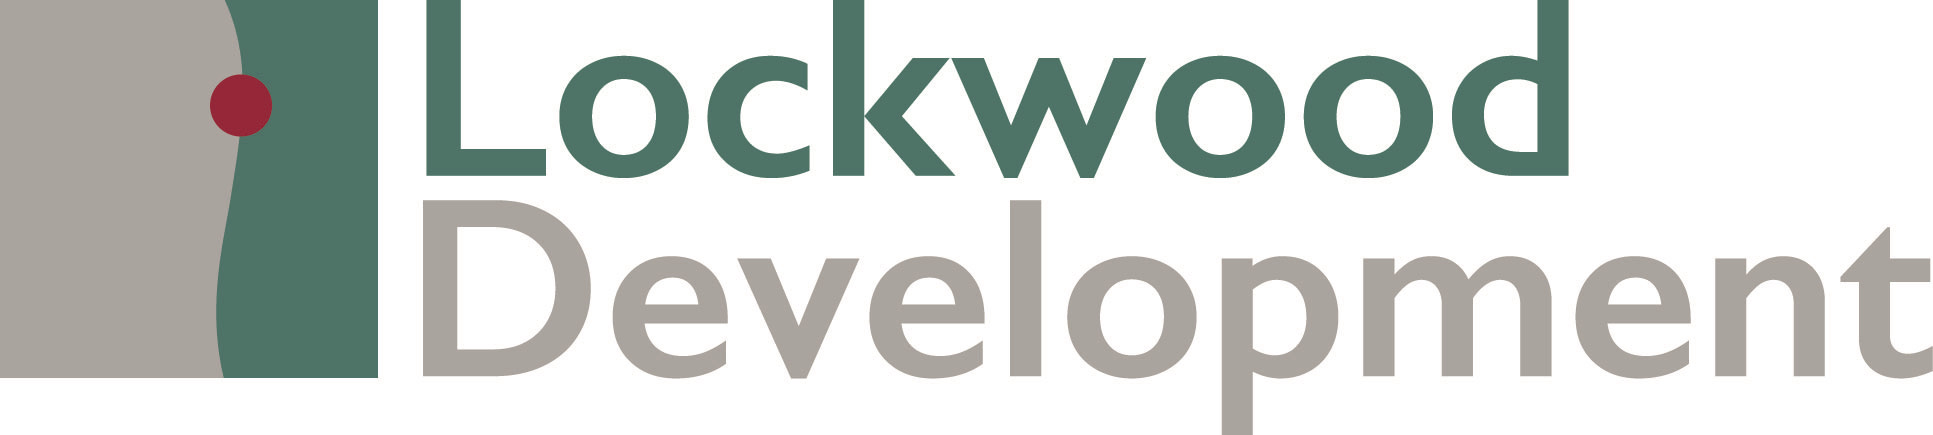 Lockwood Development Logo